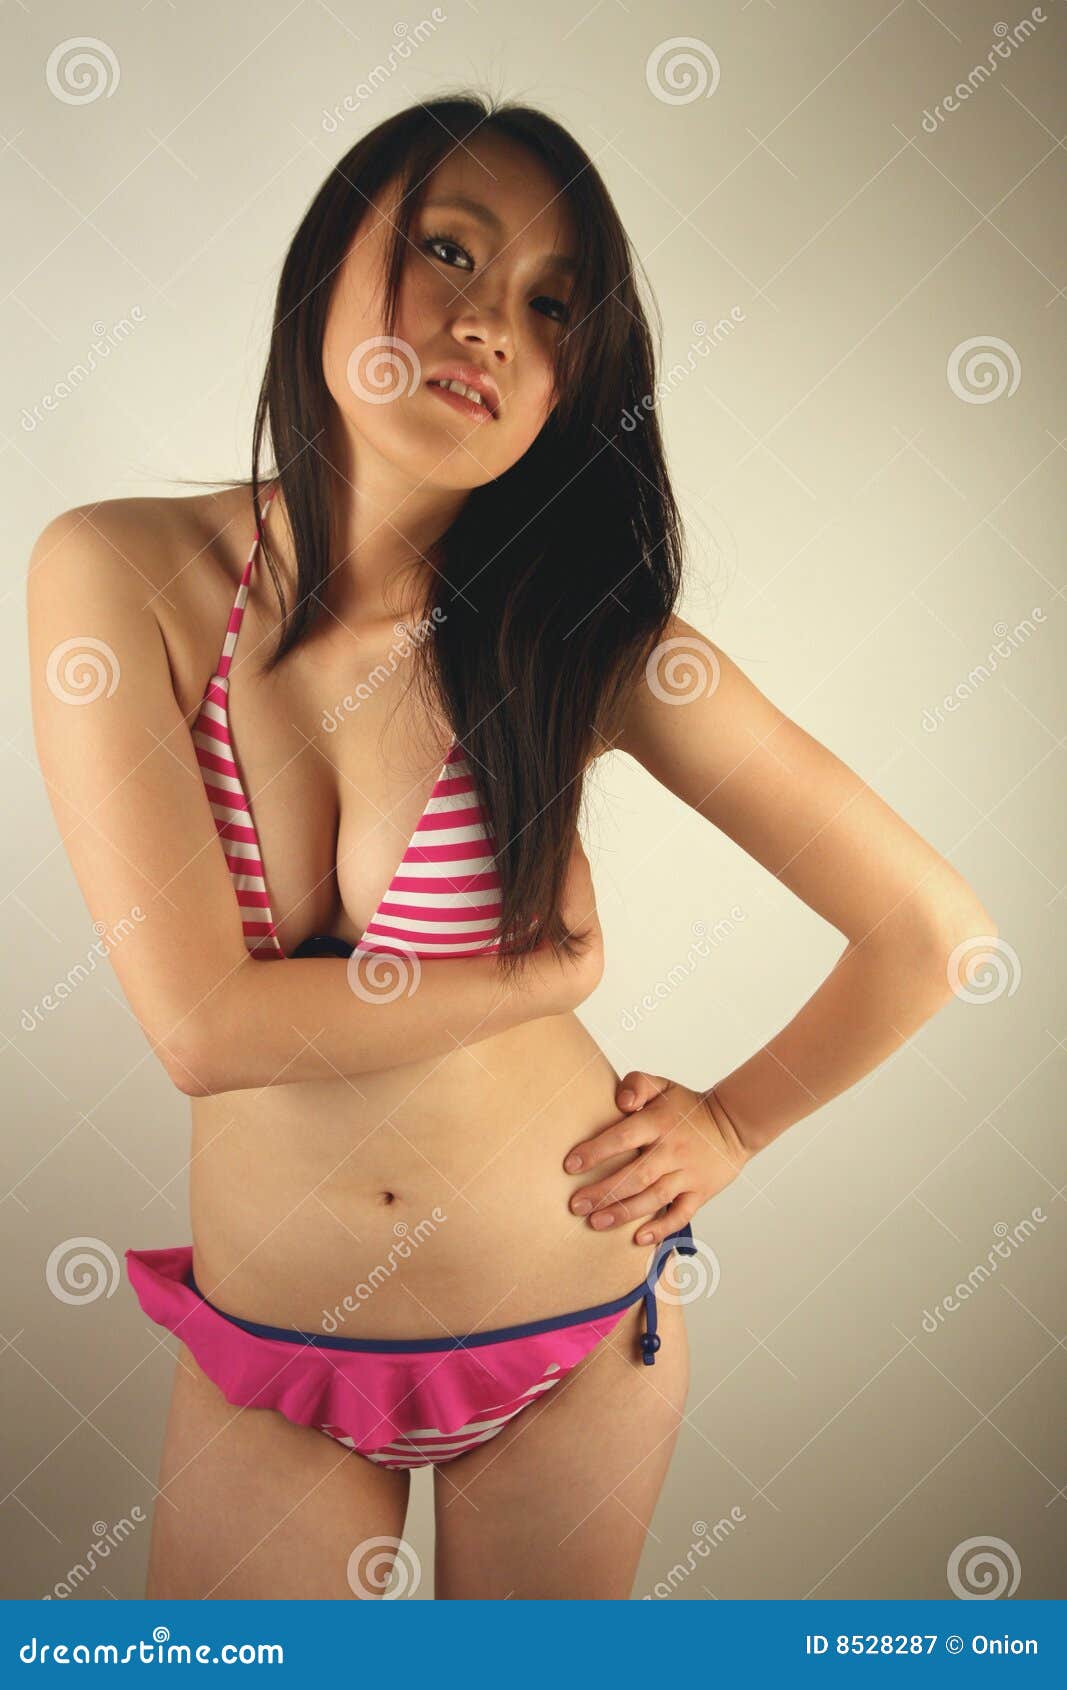 bikini girl in asian a